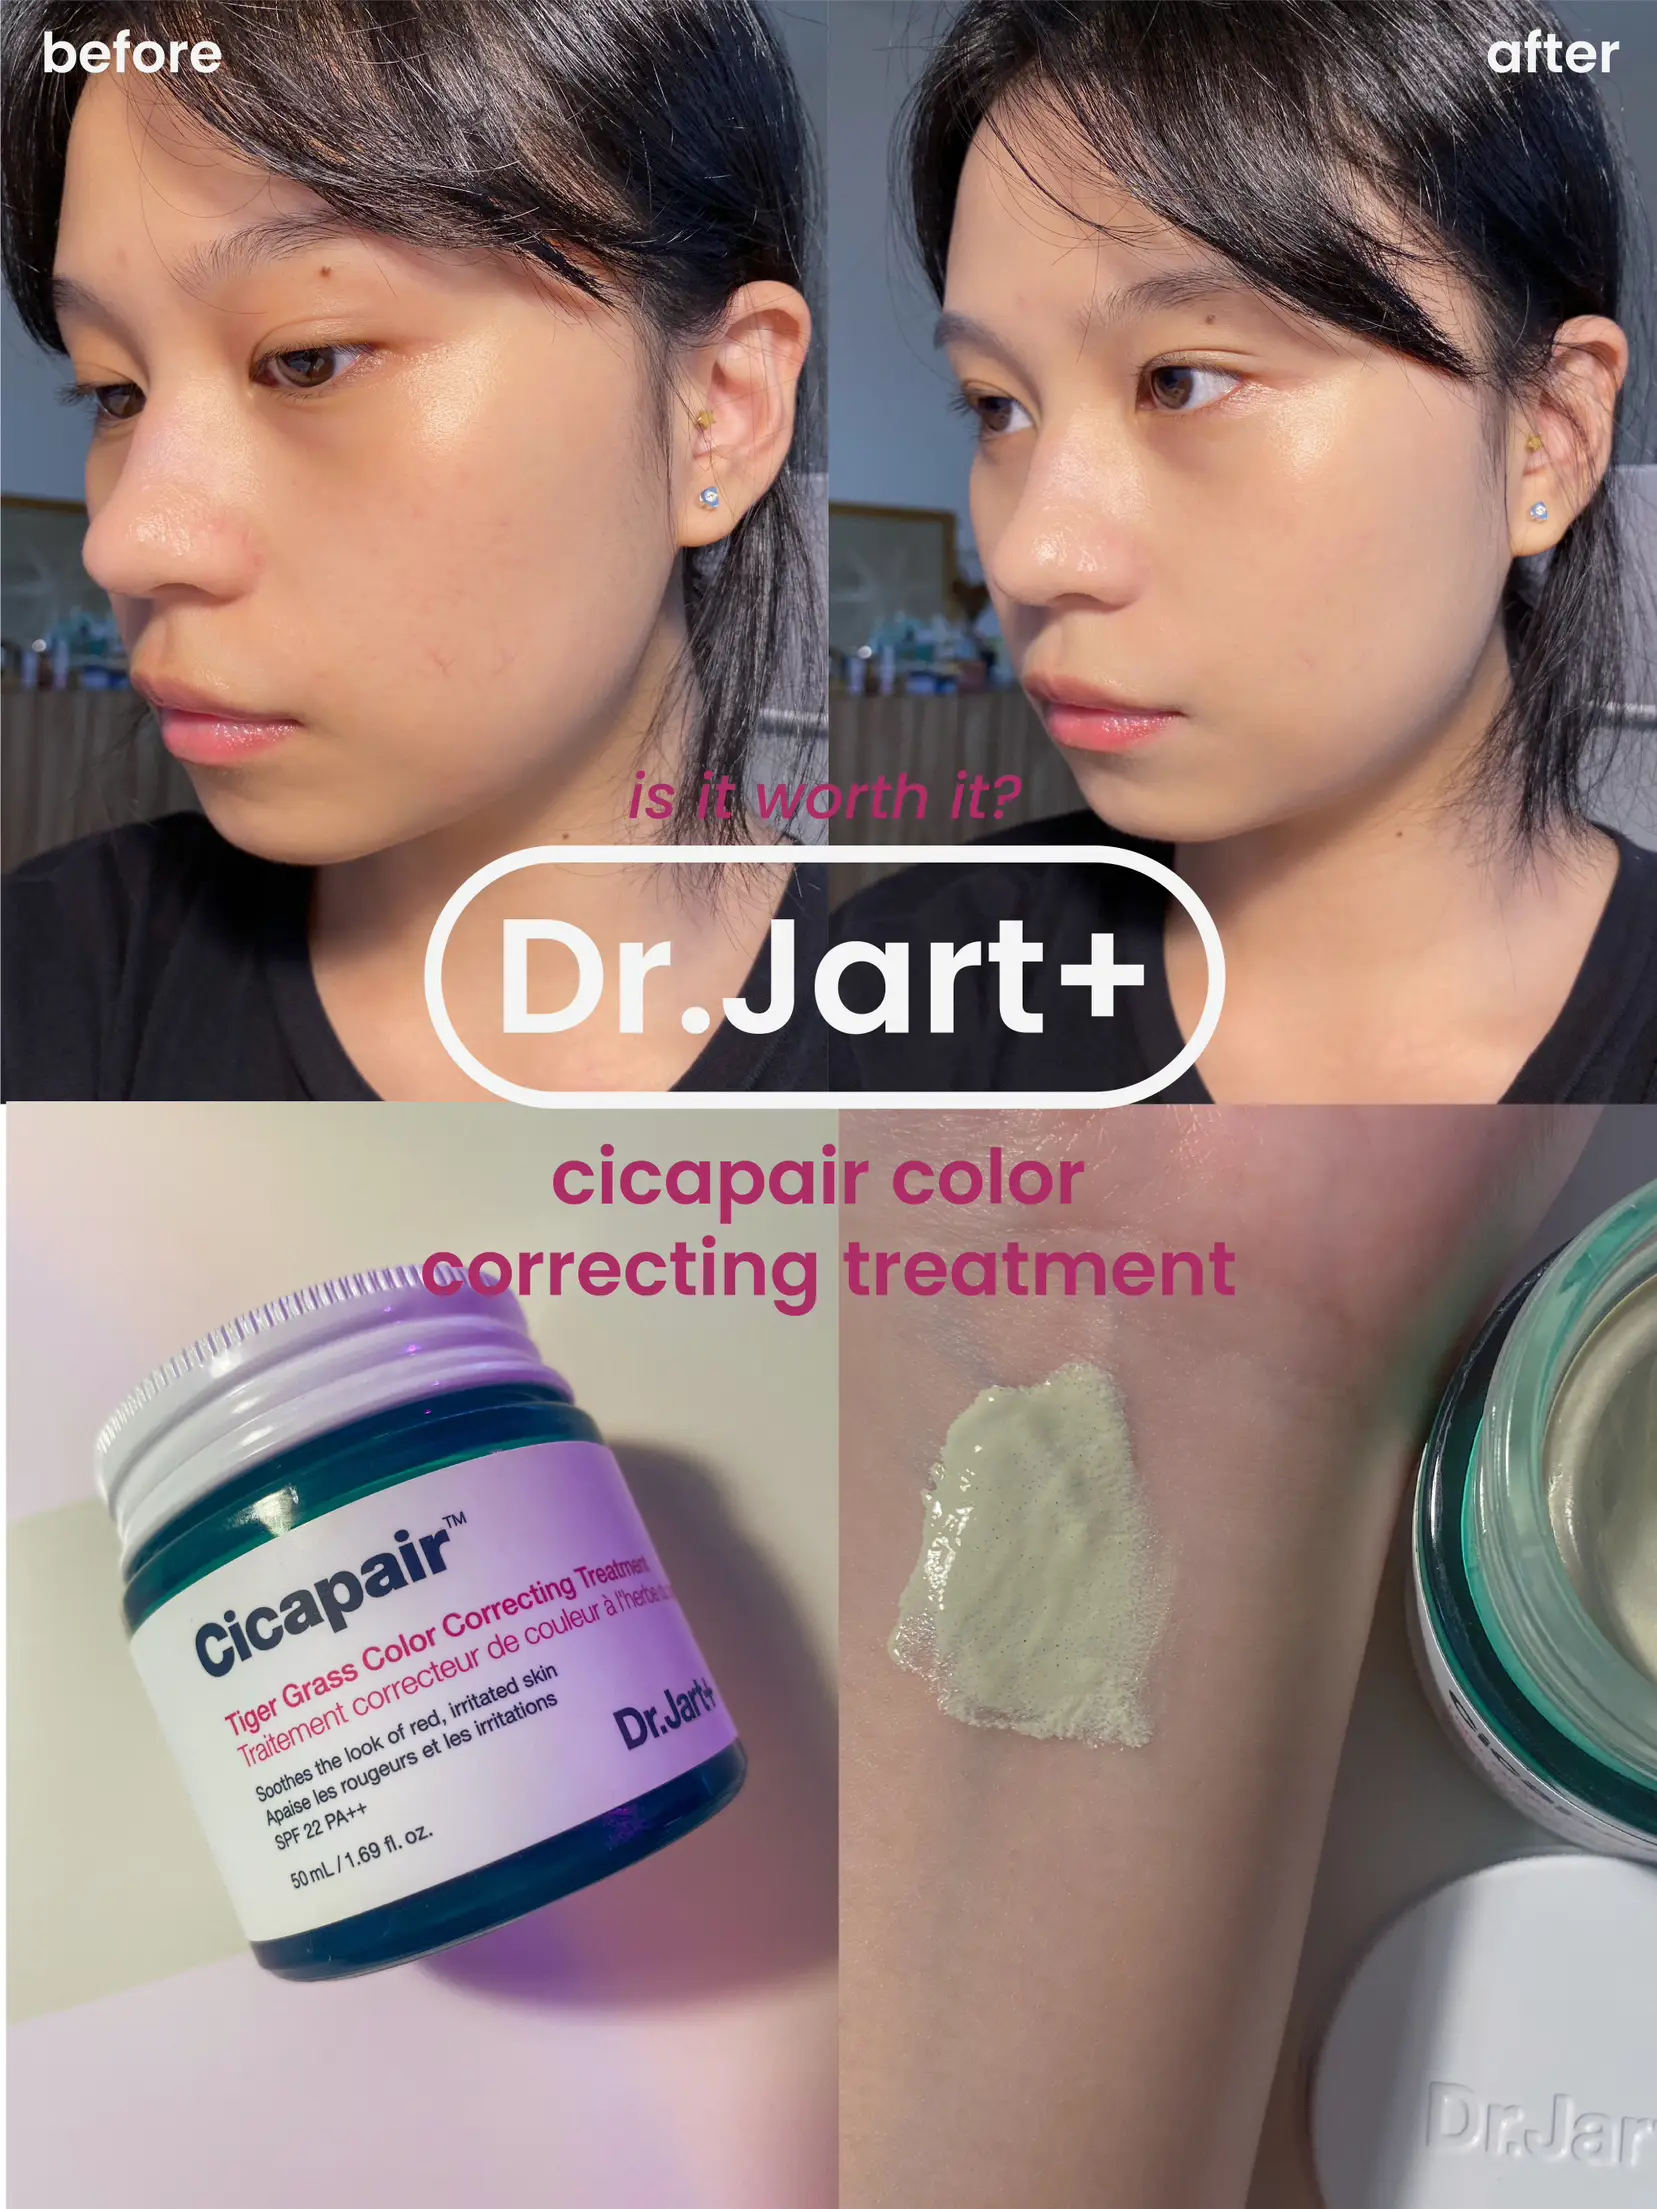 Dr. Jart+ Cicapair Color Correcting Cream Review: Dr. Jart Skincare